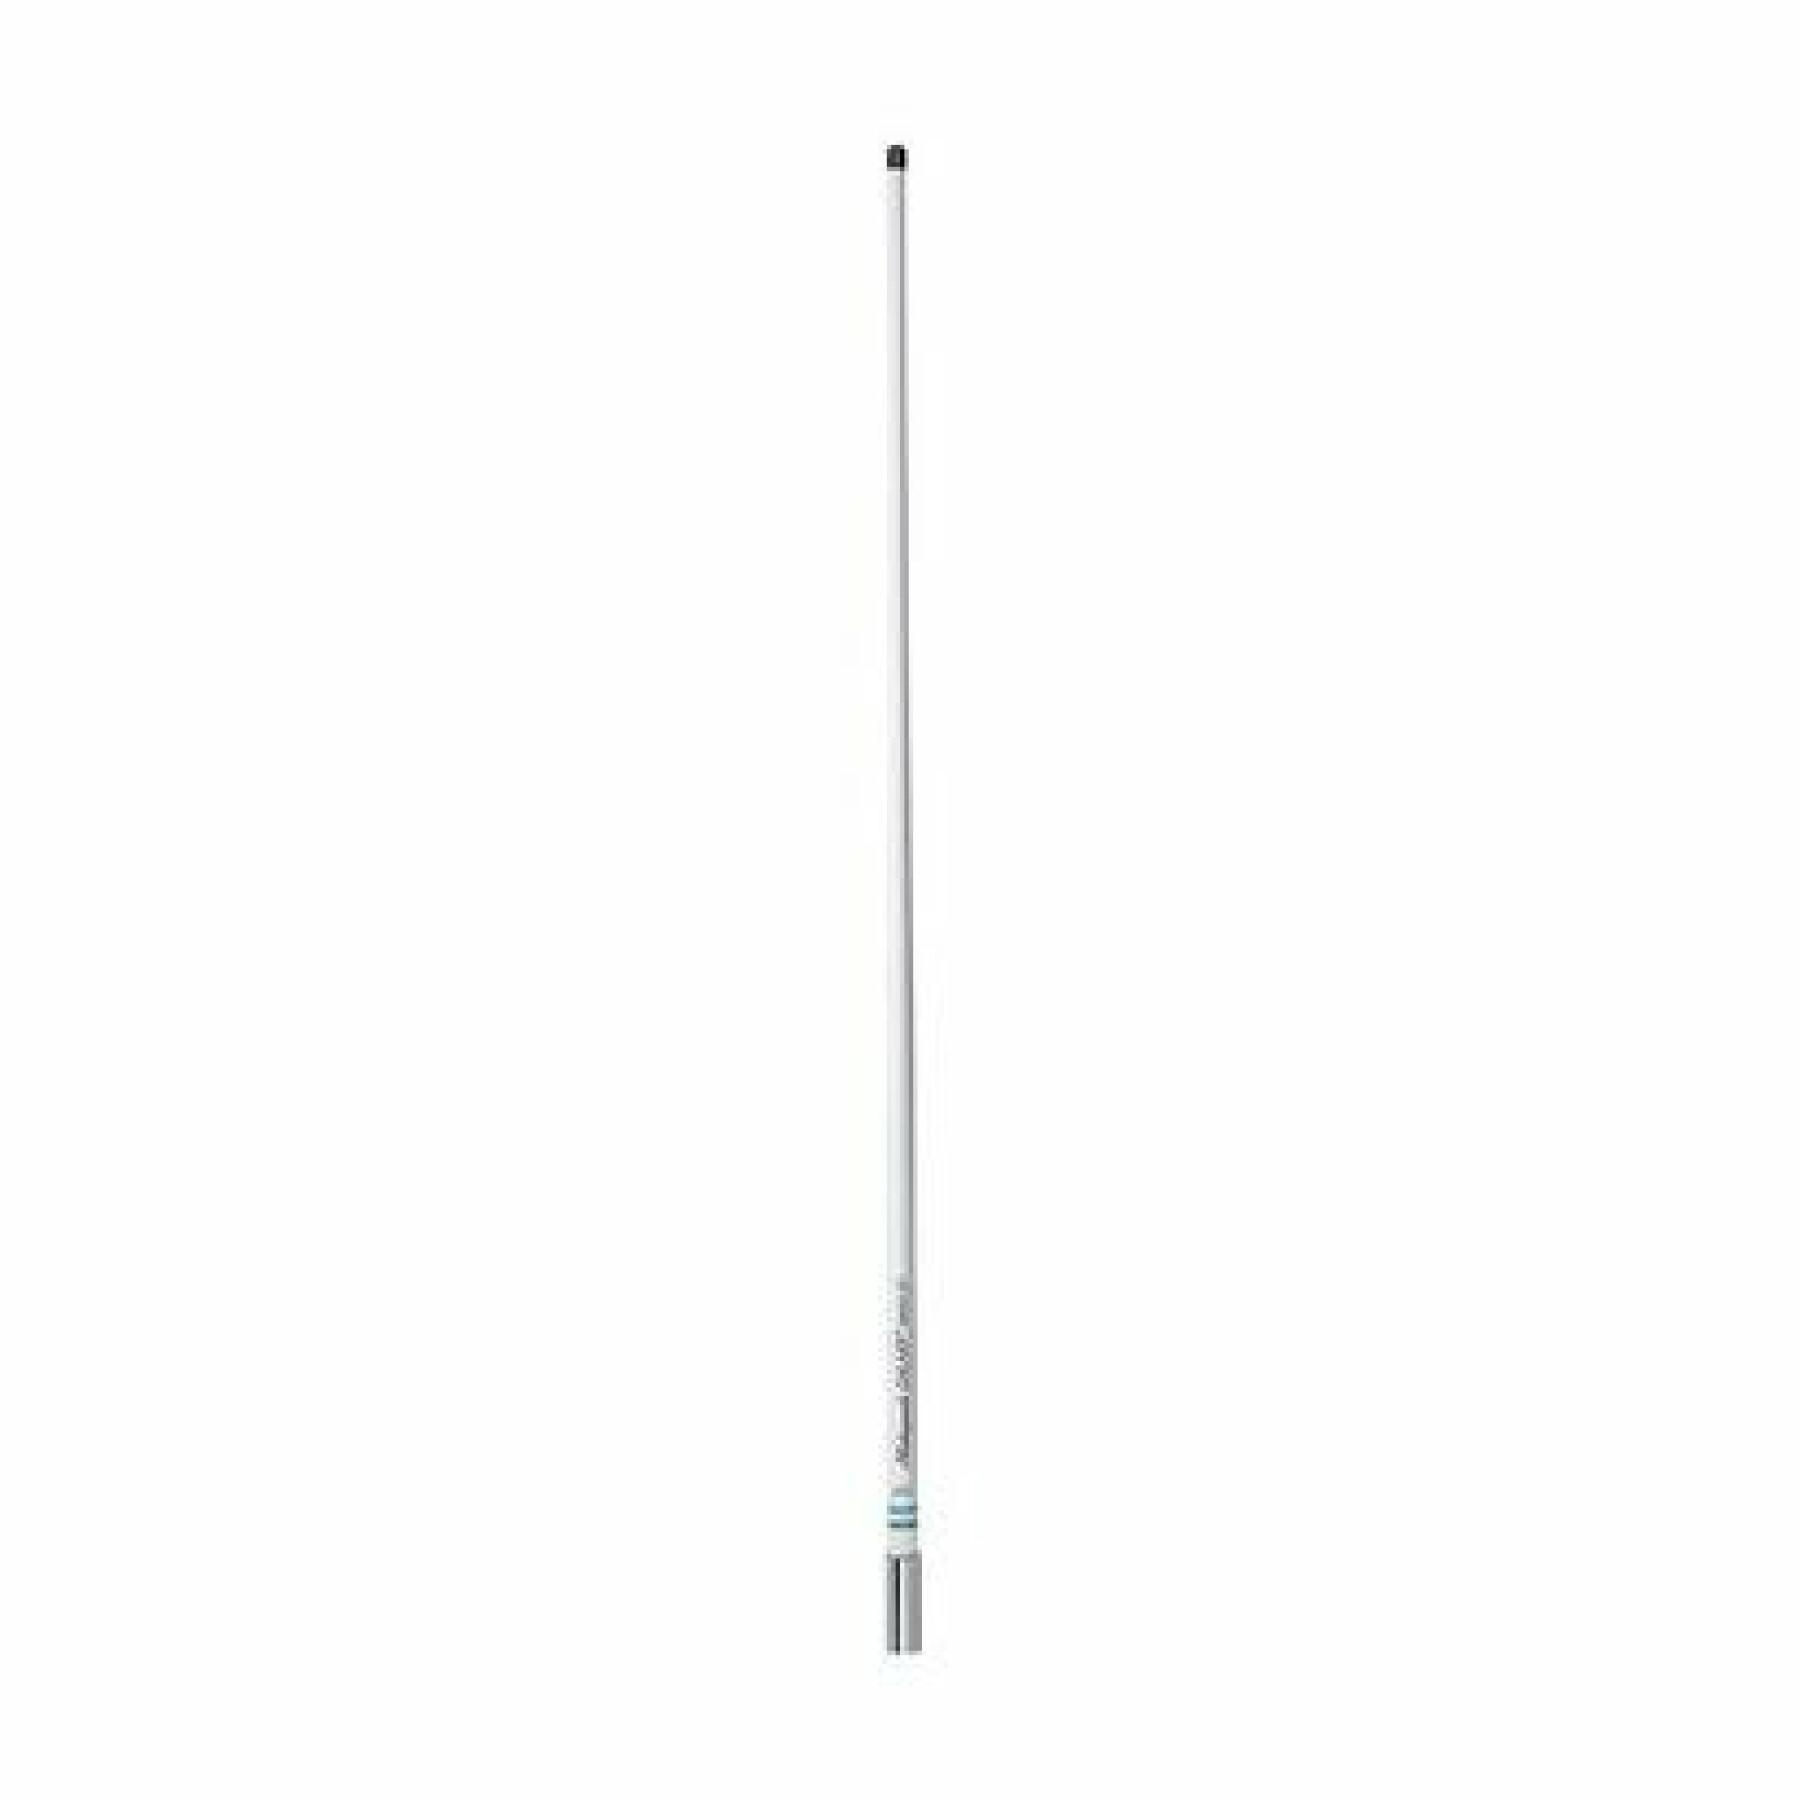 Antena de aço inoxidável ferrule antena Shakespeare VHF Galaxy 3dB – 1,2m - RG 8X+PL25